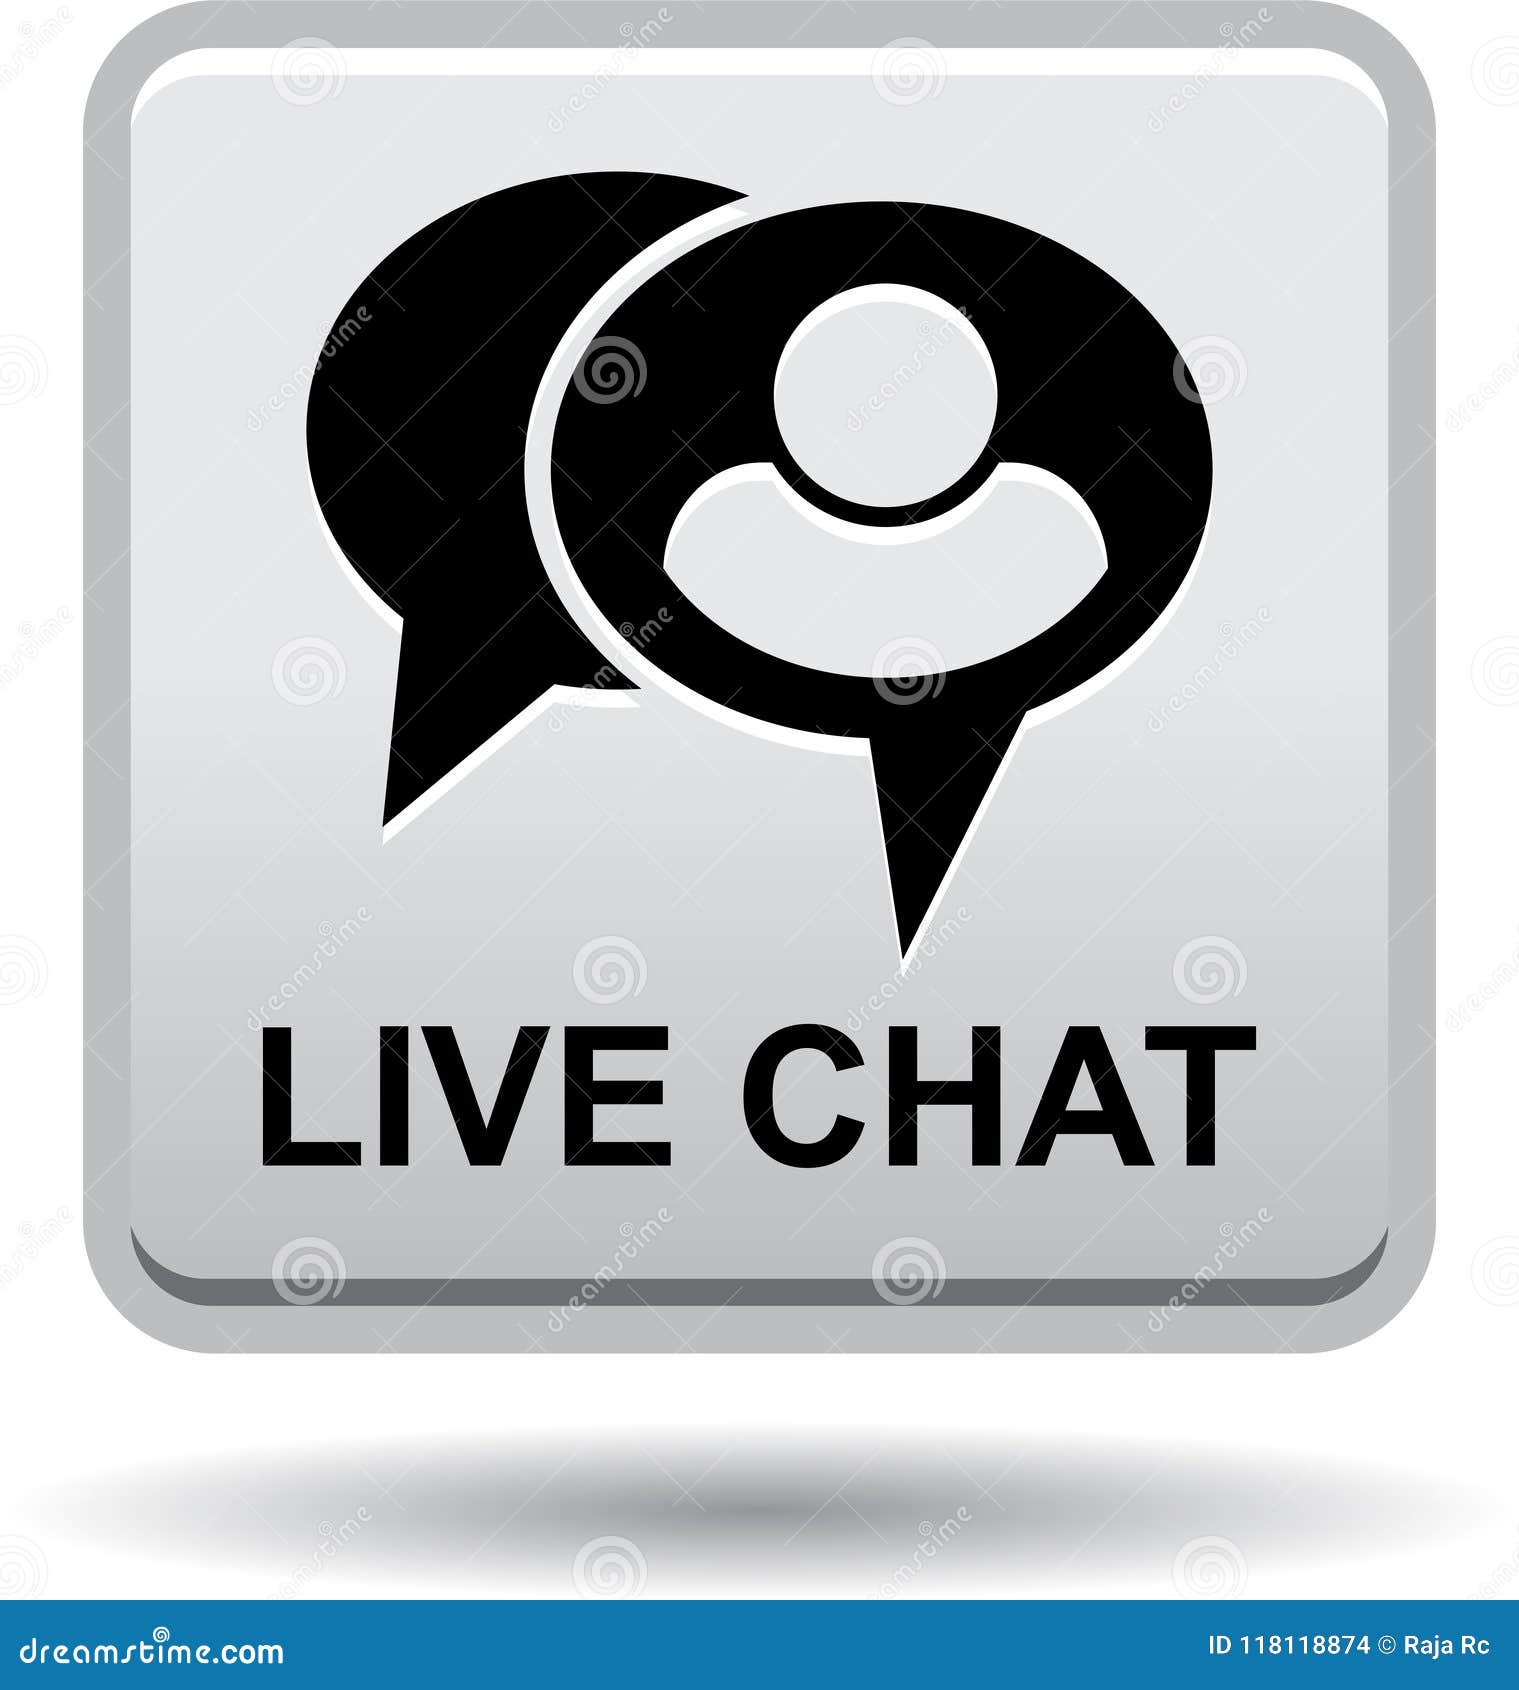 live chat icon web button gray